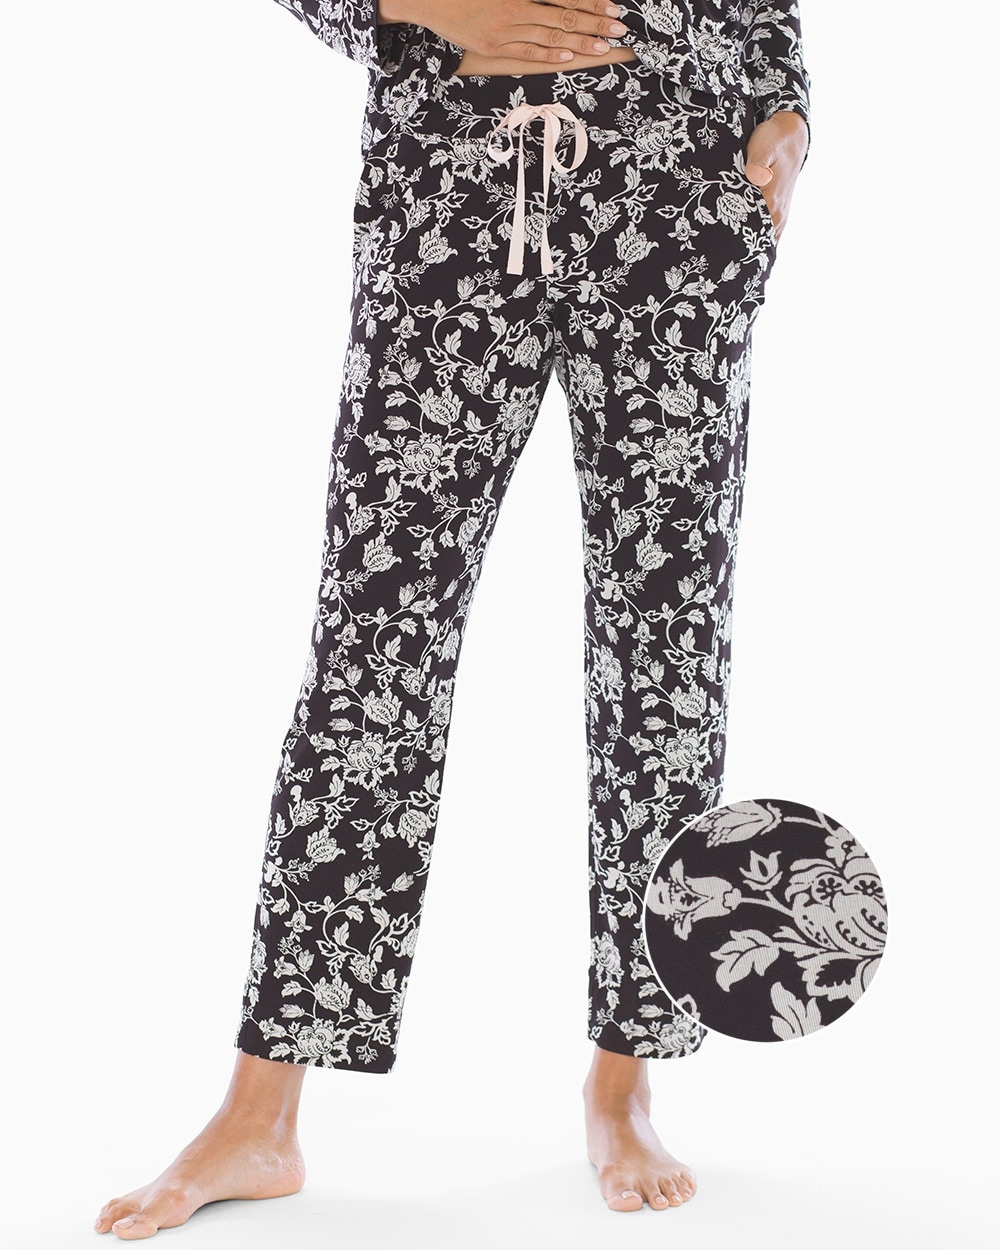 Cool Nights Grosgrain Trim Ankle Pajama Pants Finery Floral Black